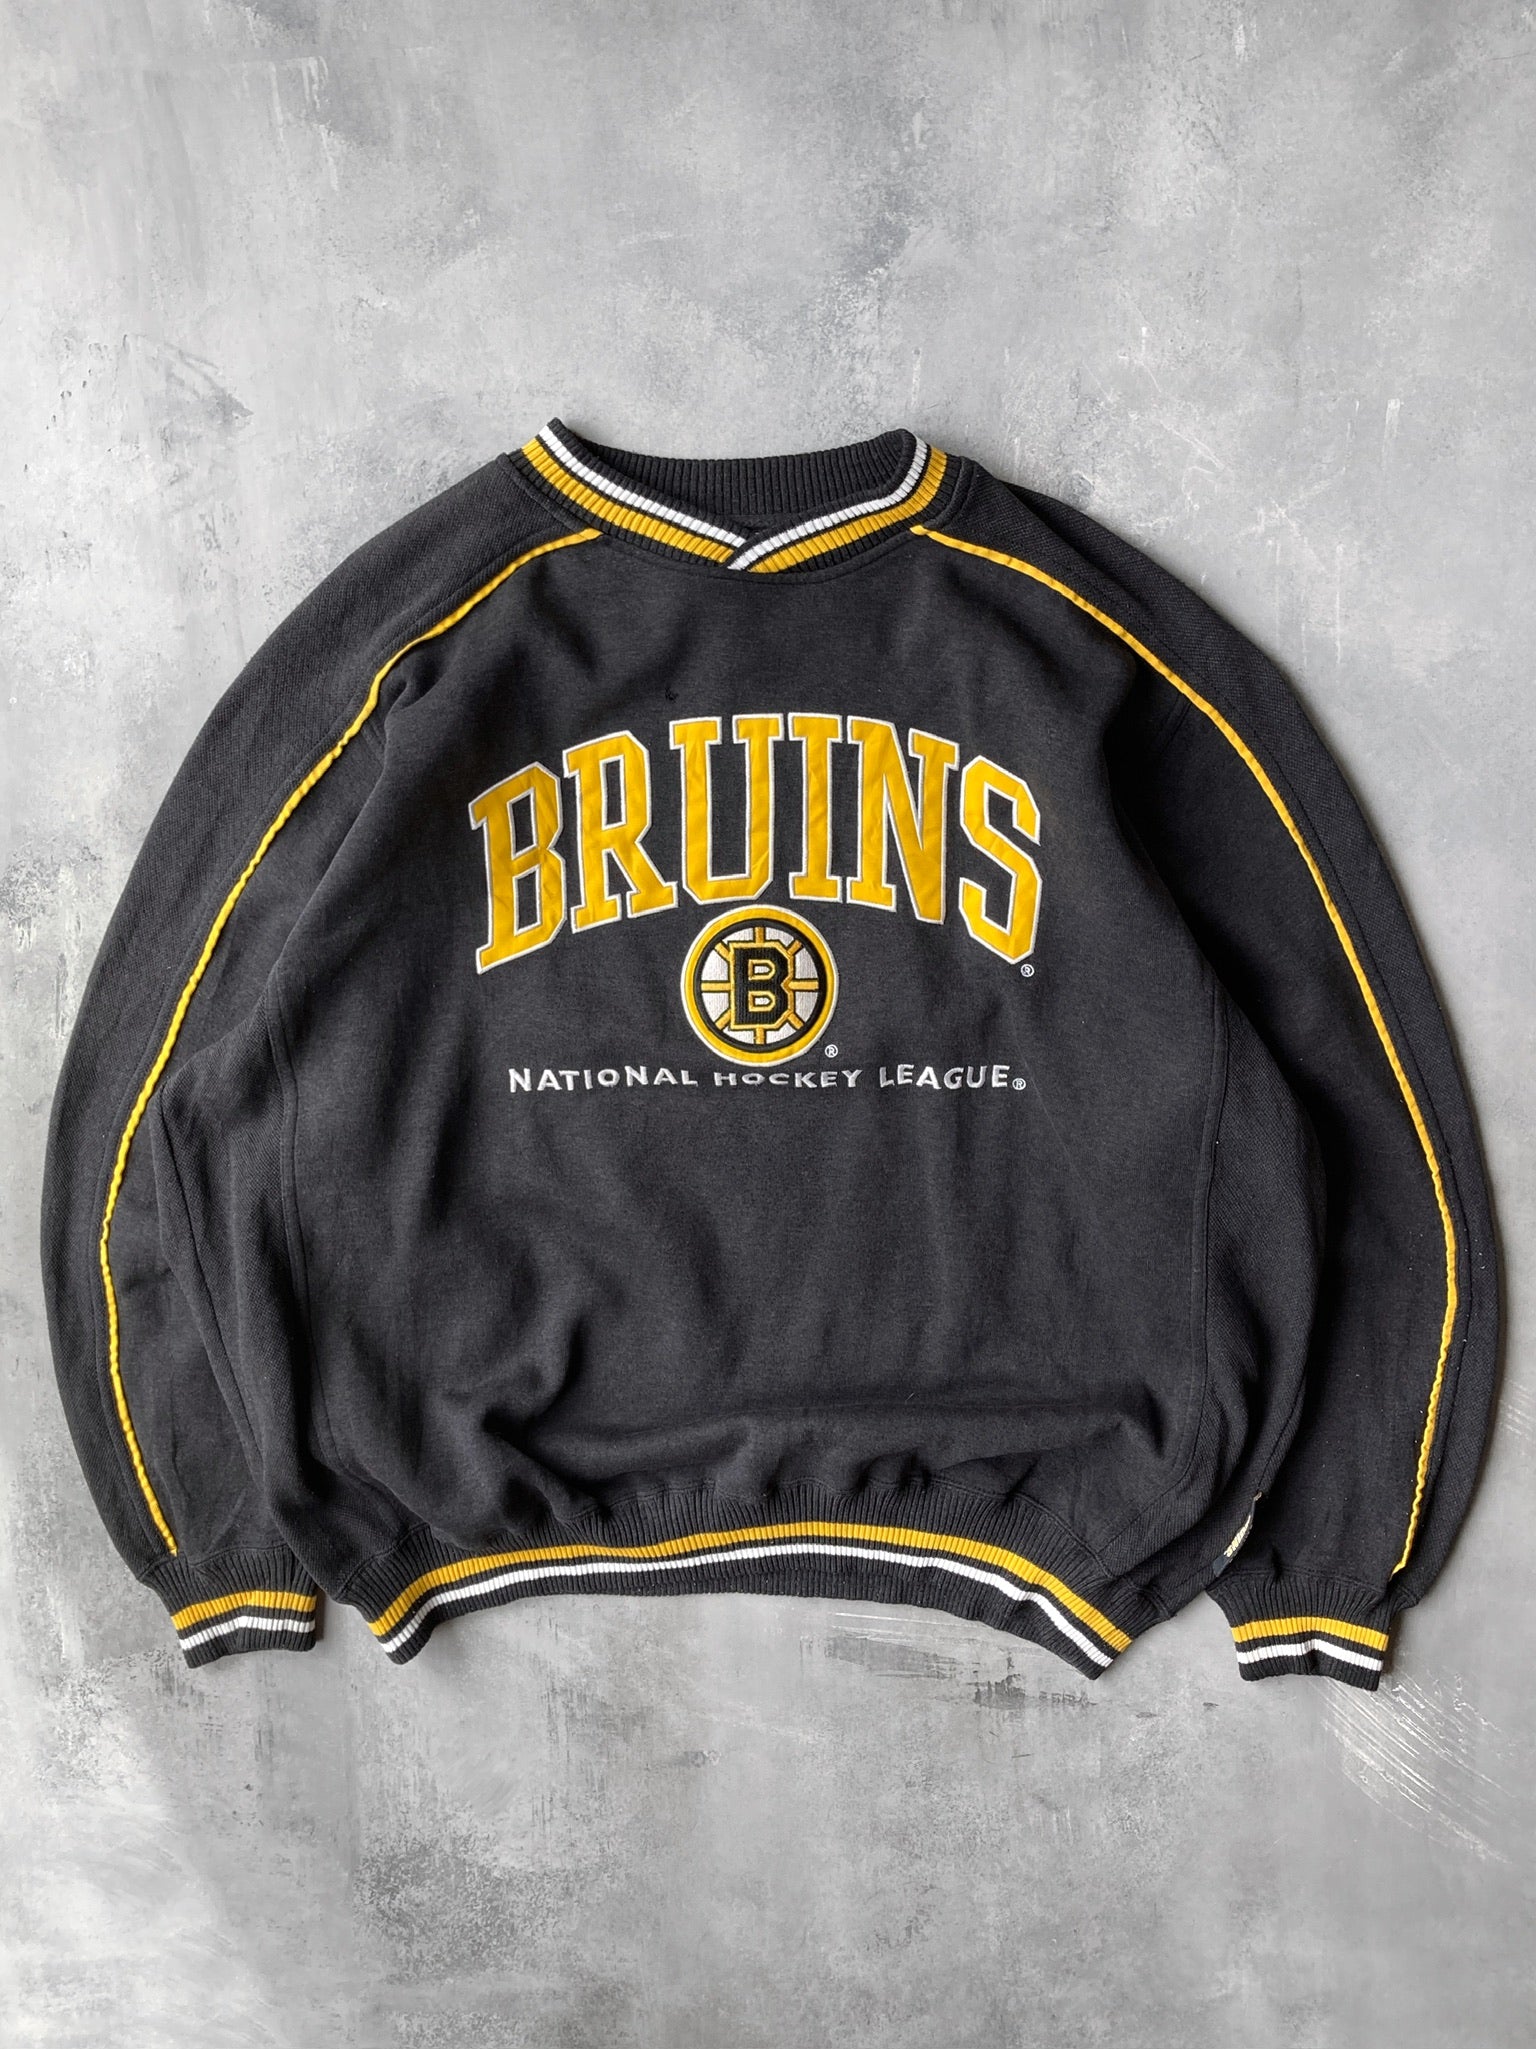 Boston Bruins national hockey league Vintage shirt, hoodie